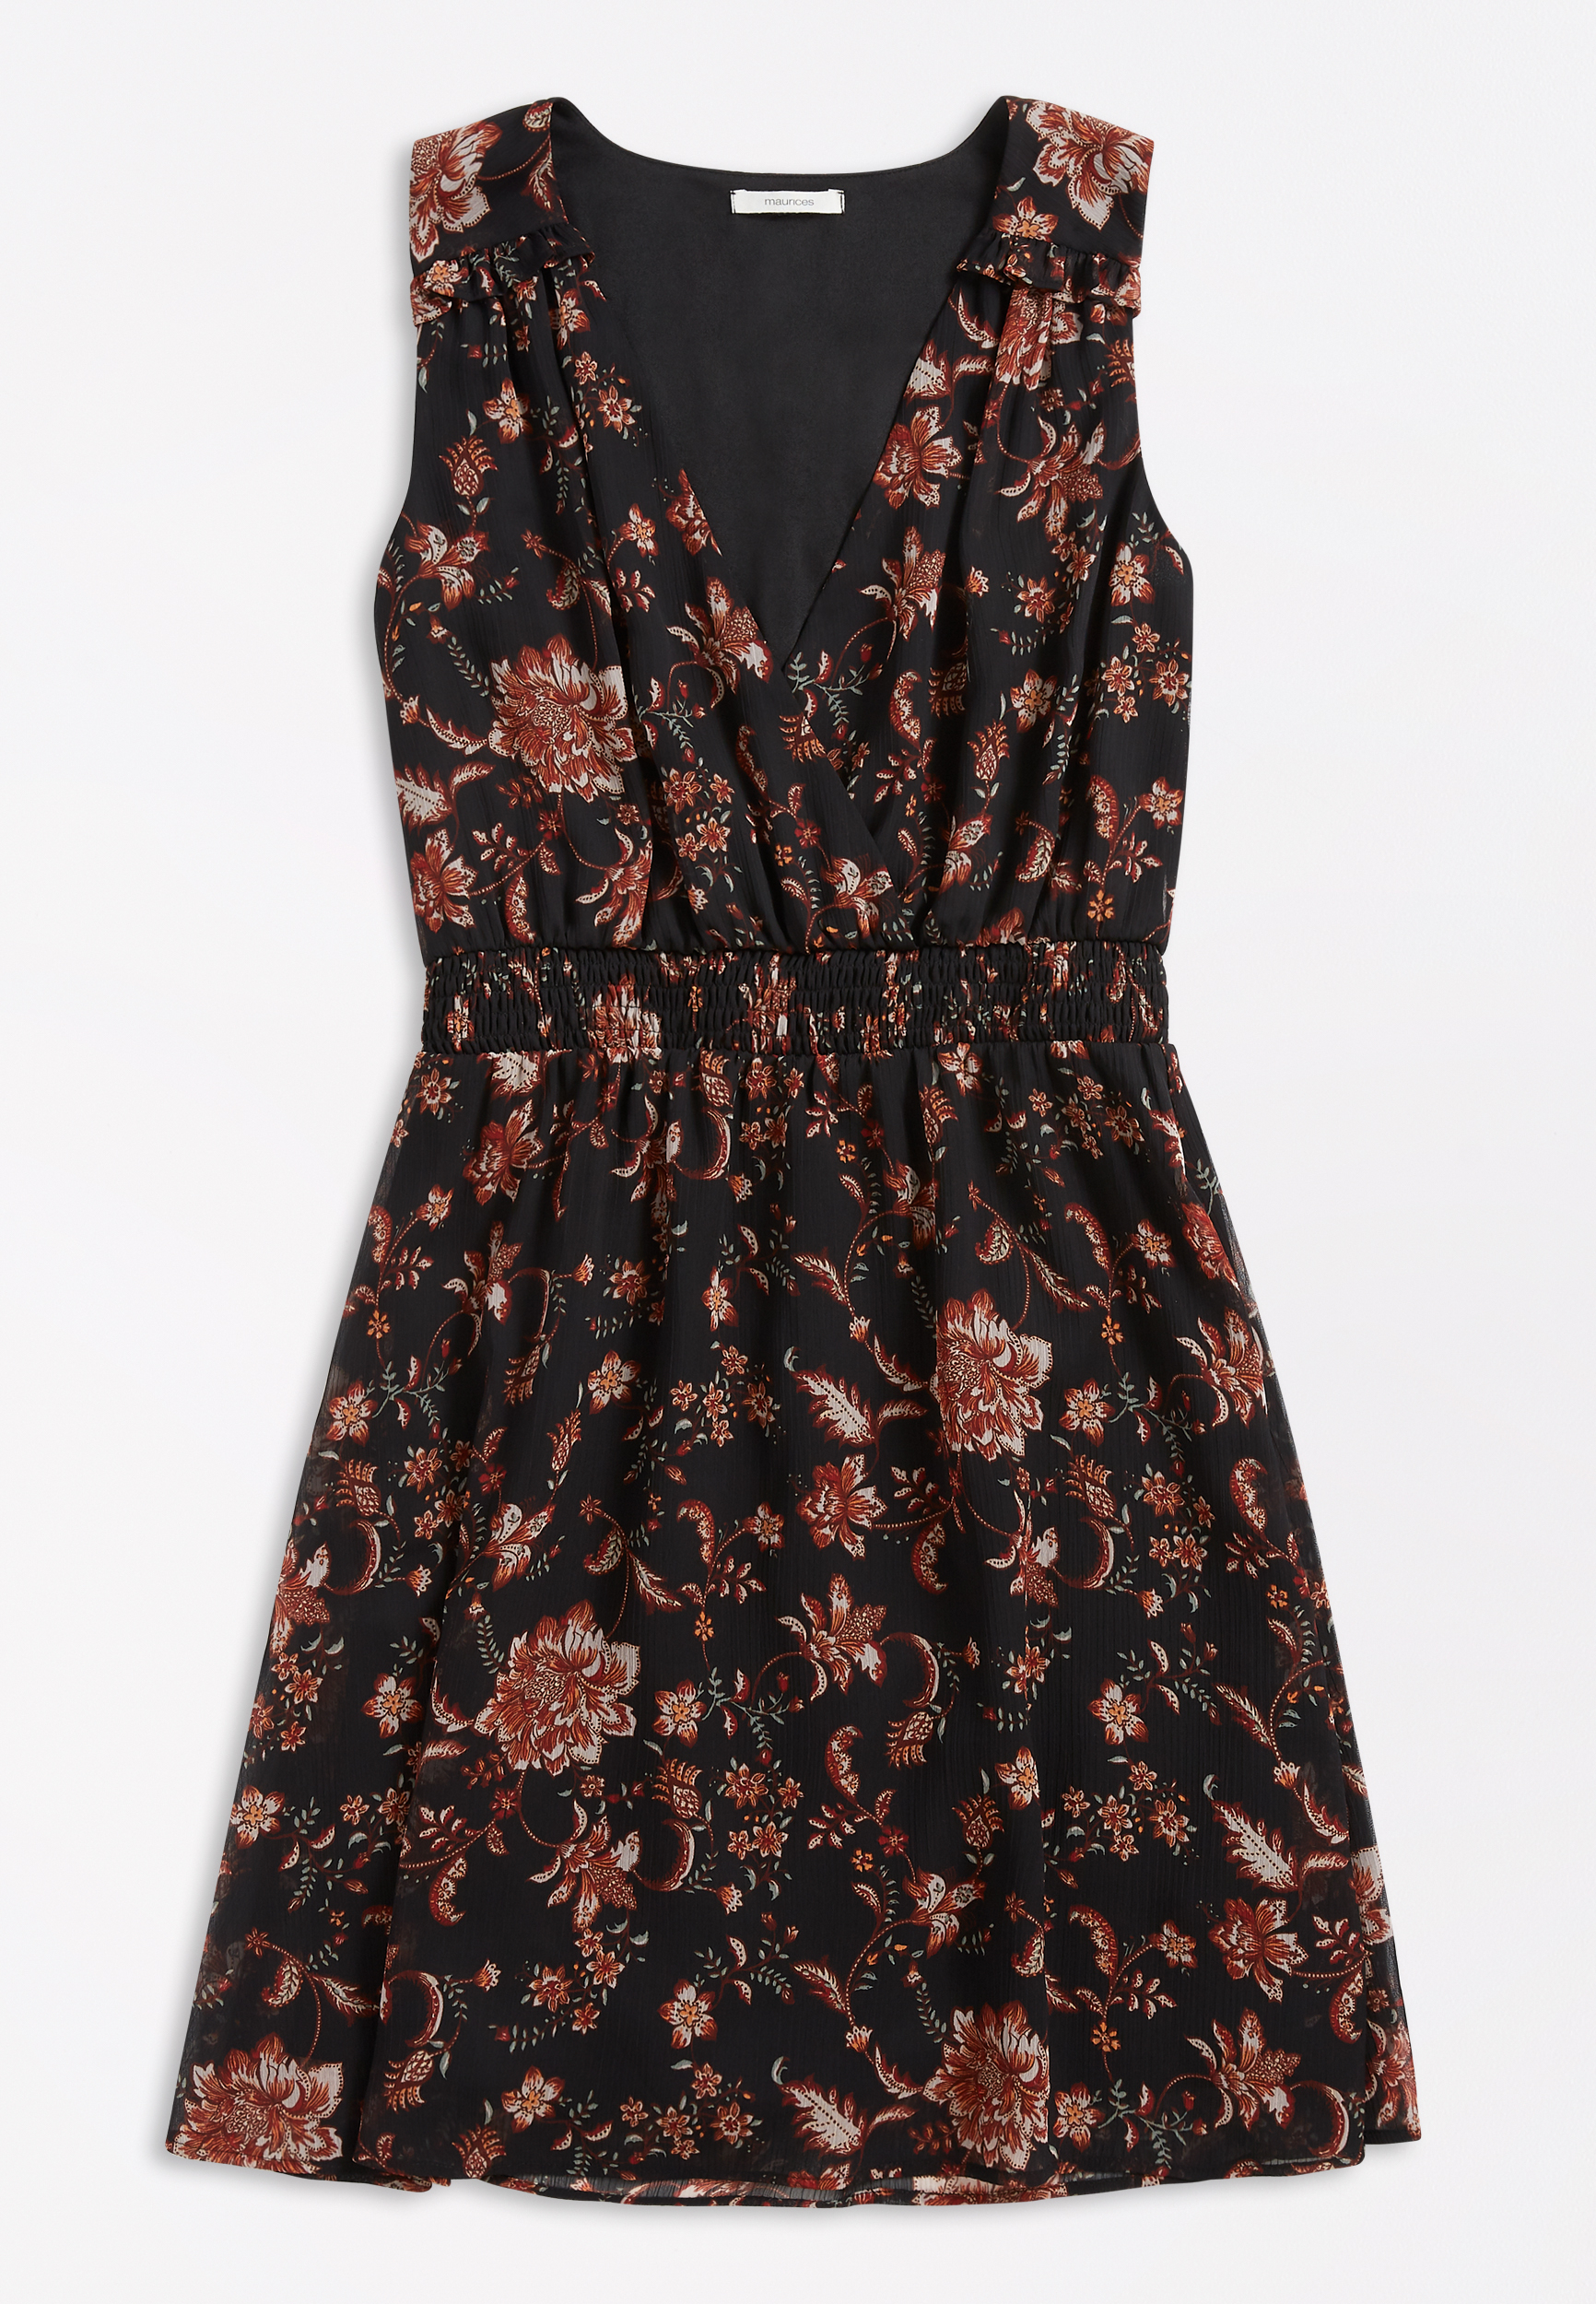 maurices black floral dress